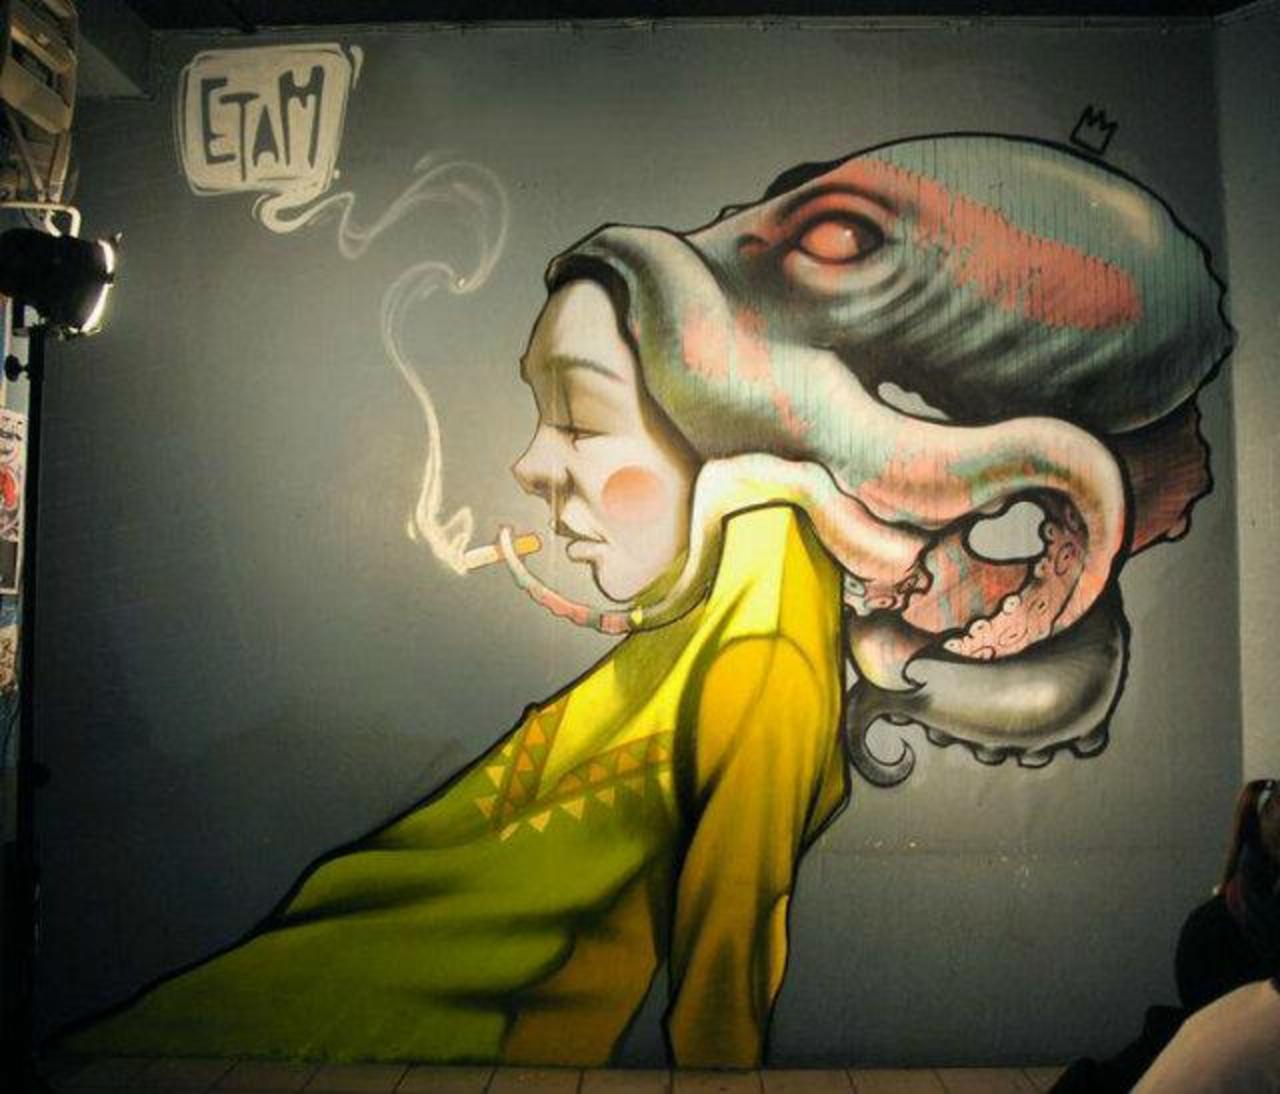 “@5putnik1: The Other Side #etam #streetart #graffiti #art #funky #dope . : http://t.co/KYfGd2Azqd”